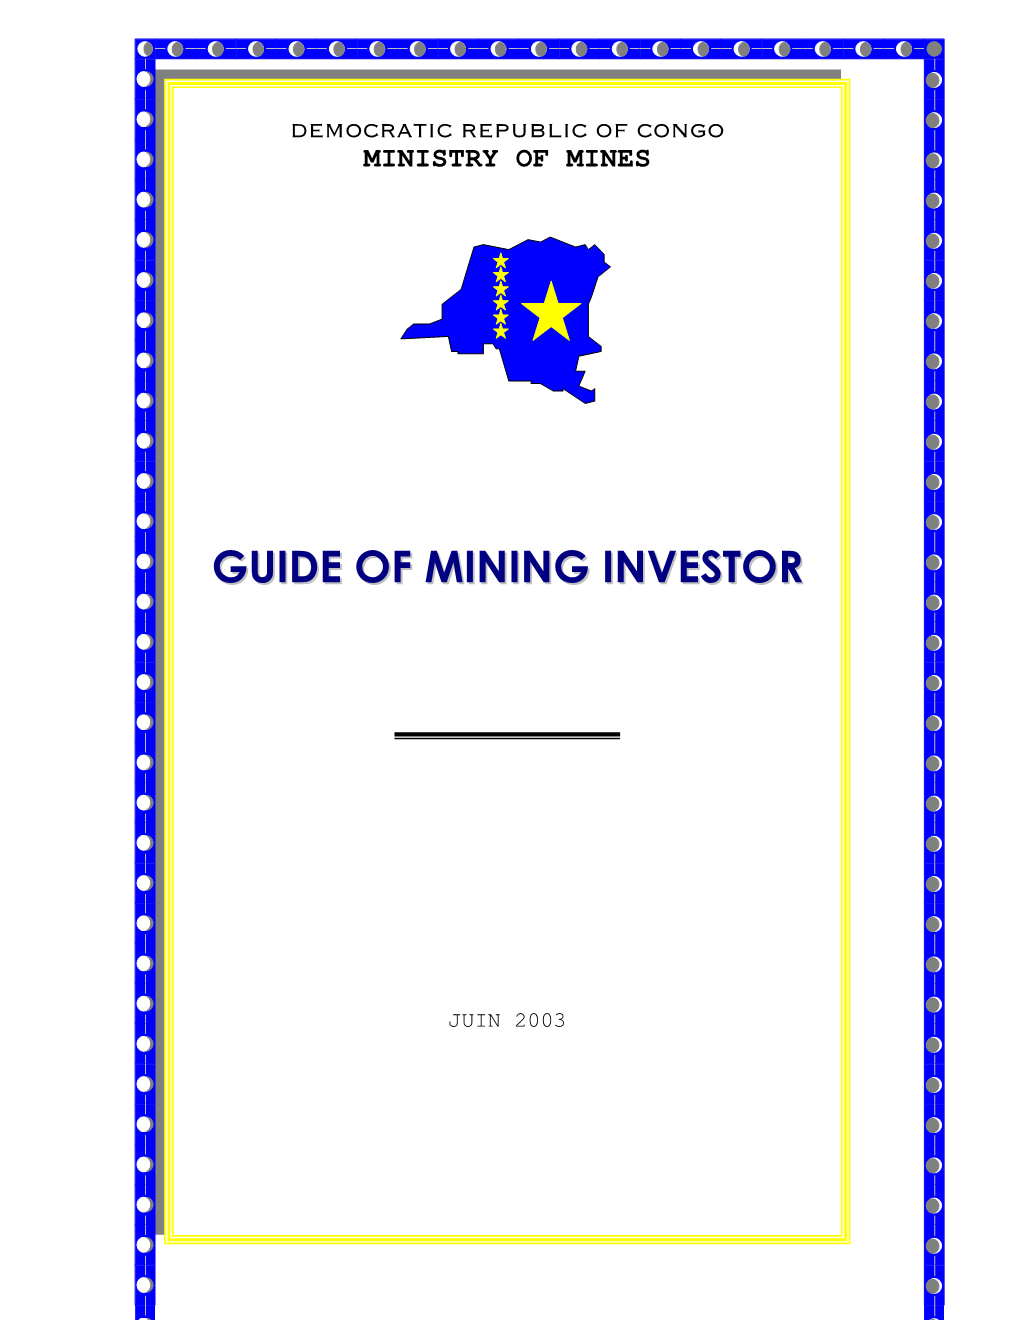 Guide of Mining Investor